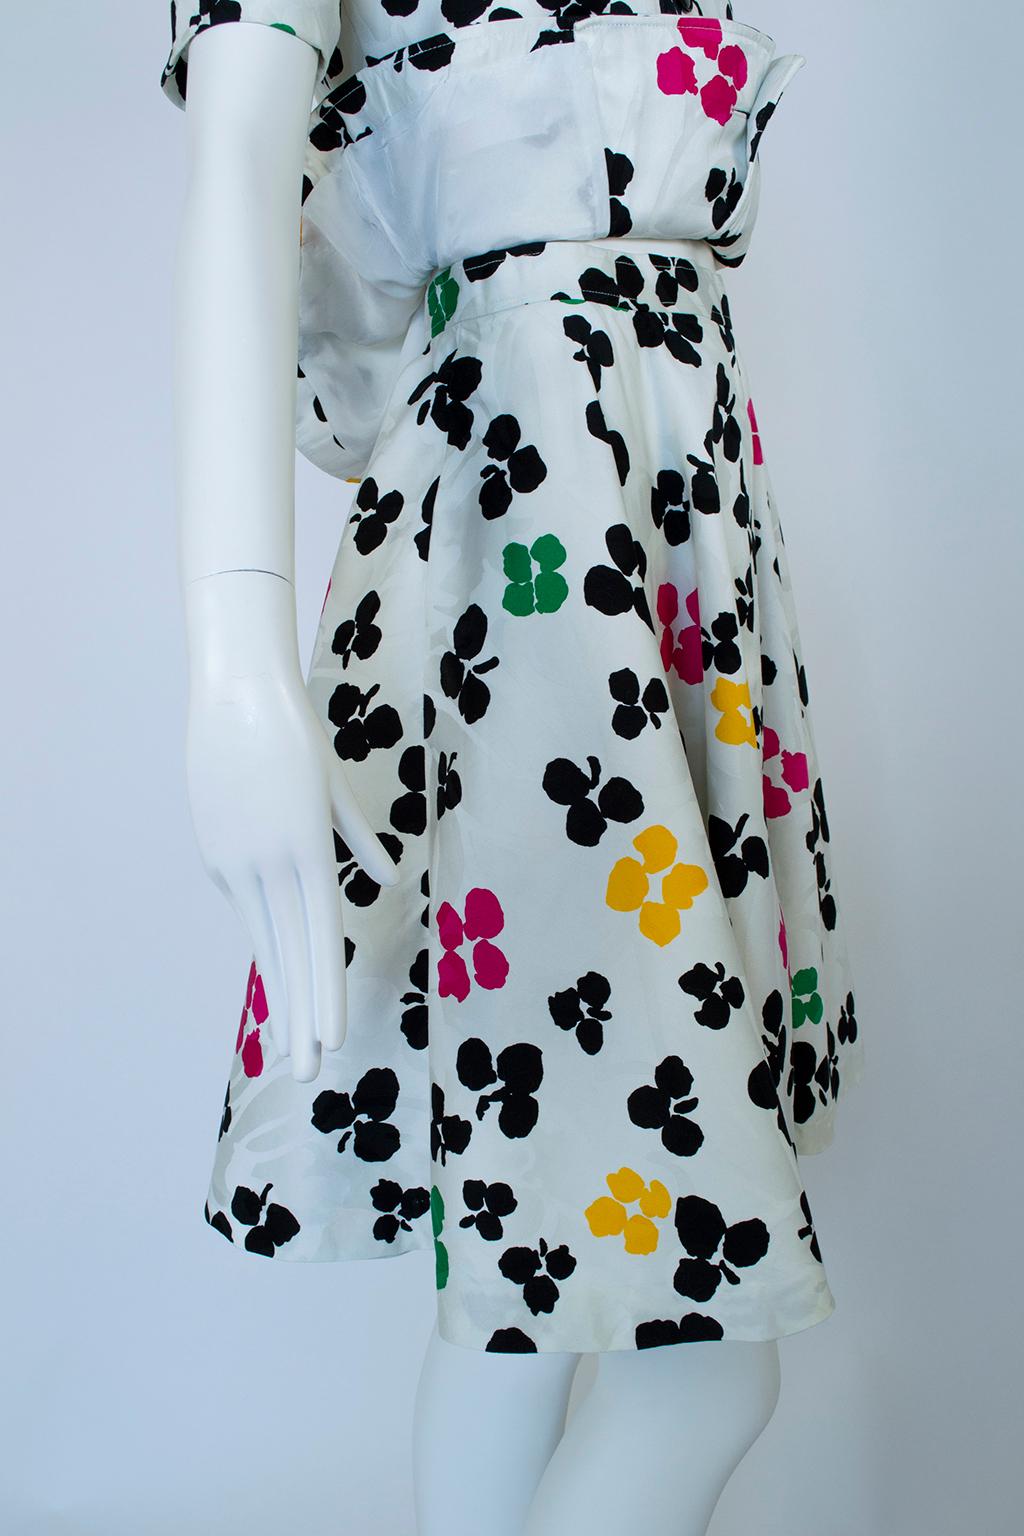 Oscar de la Renta Multicolor Floral Short Sleeve Ballerina Skirt Suit - M, 1980s For Sale 3